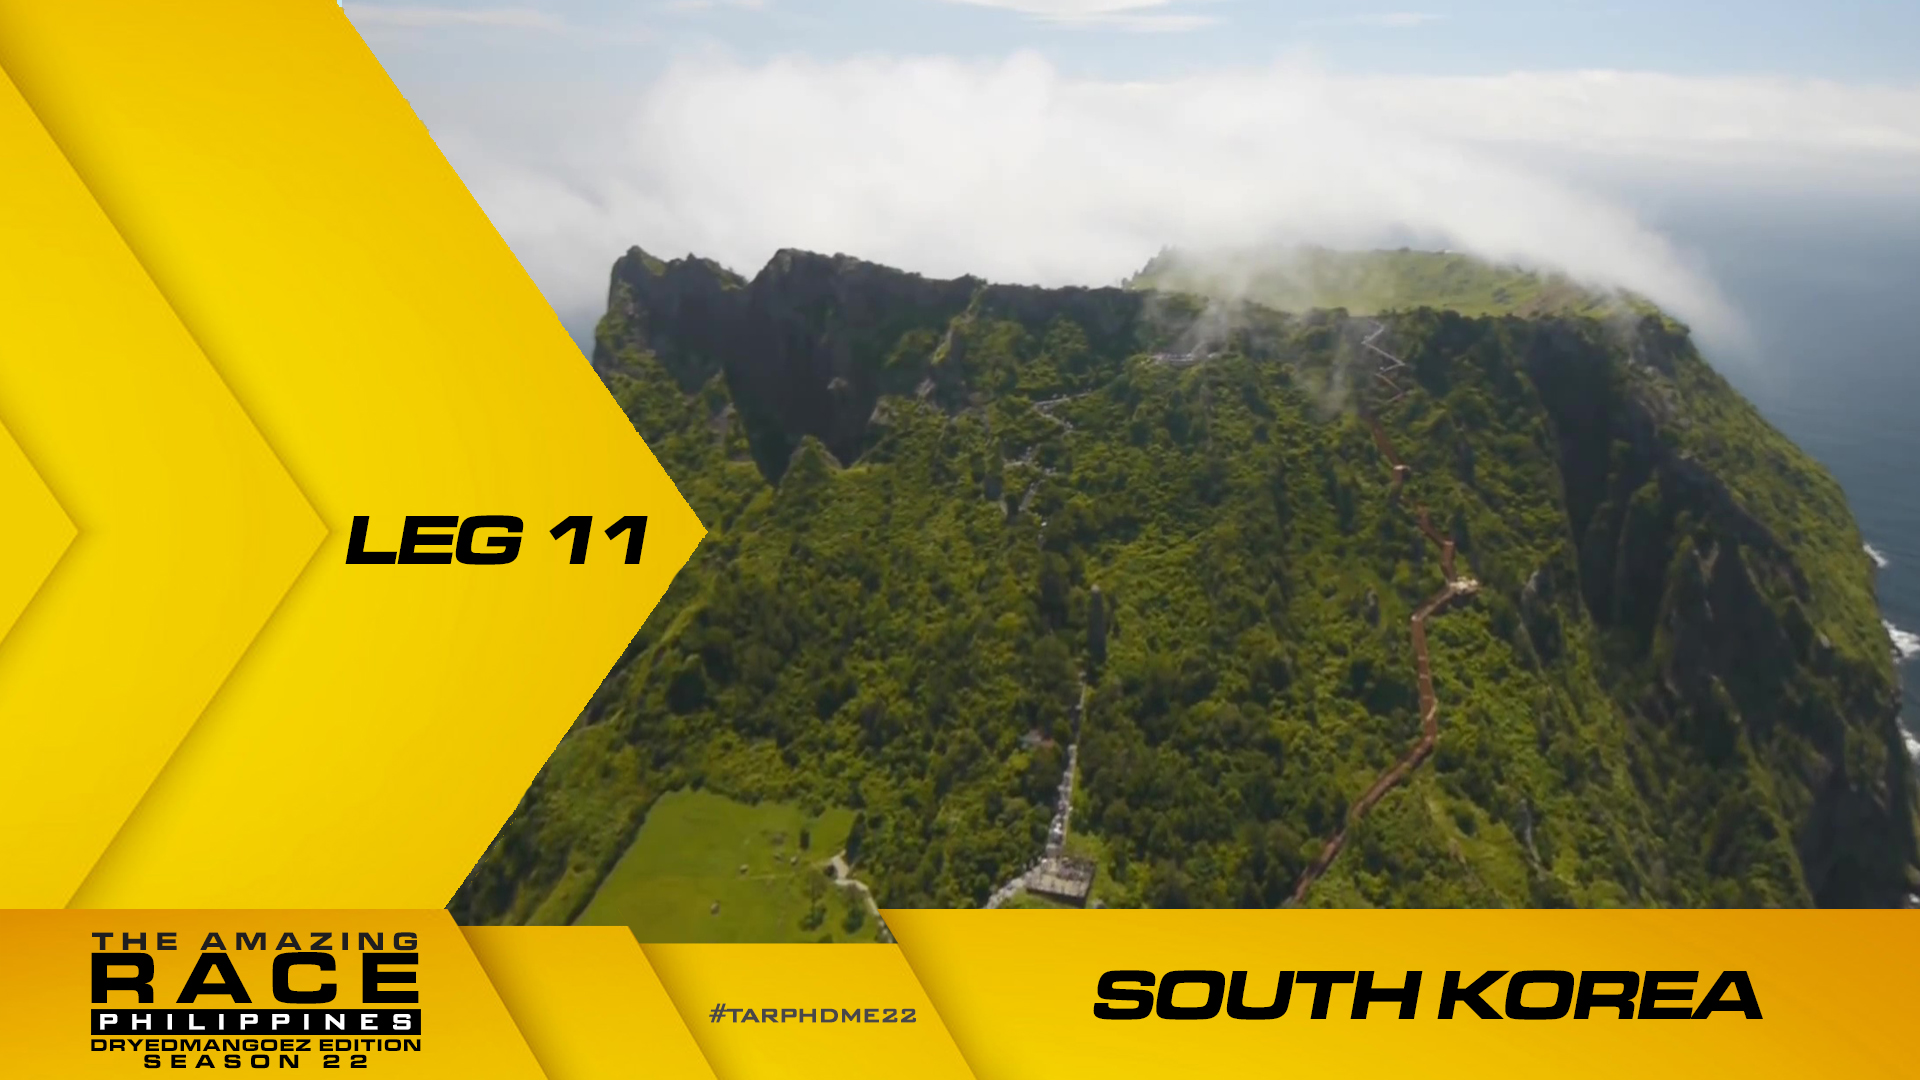 The Amazing Race Philippines: DryedMangoez Edition Season 22, Leg 11 – South Korea